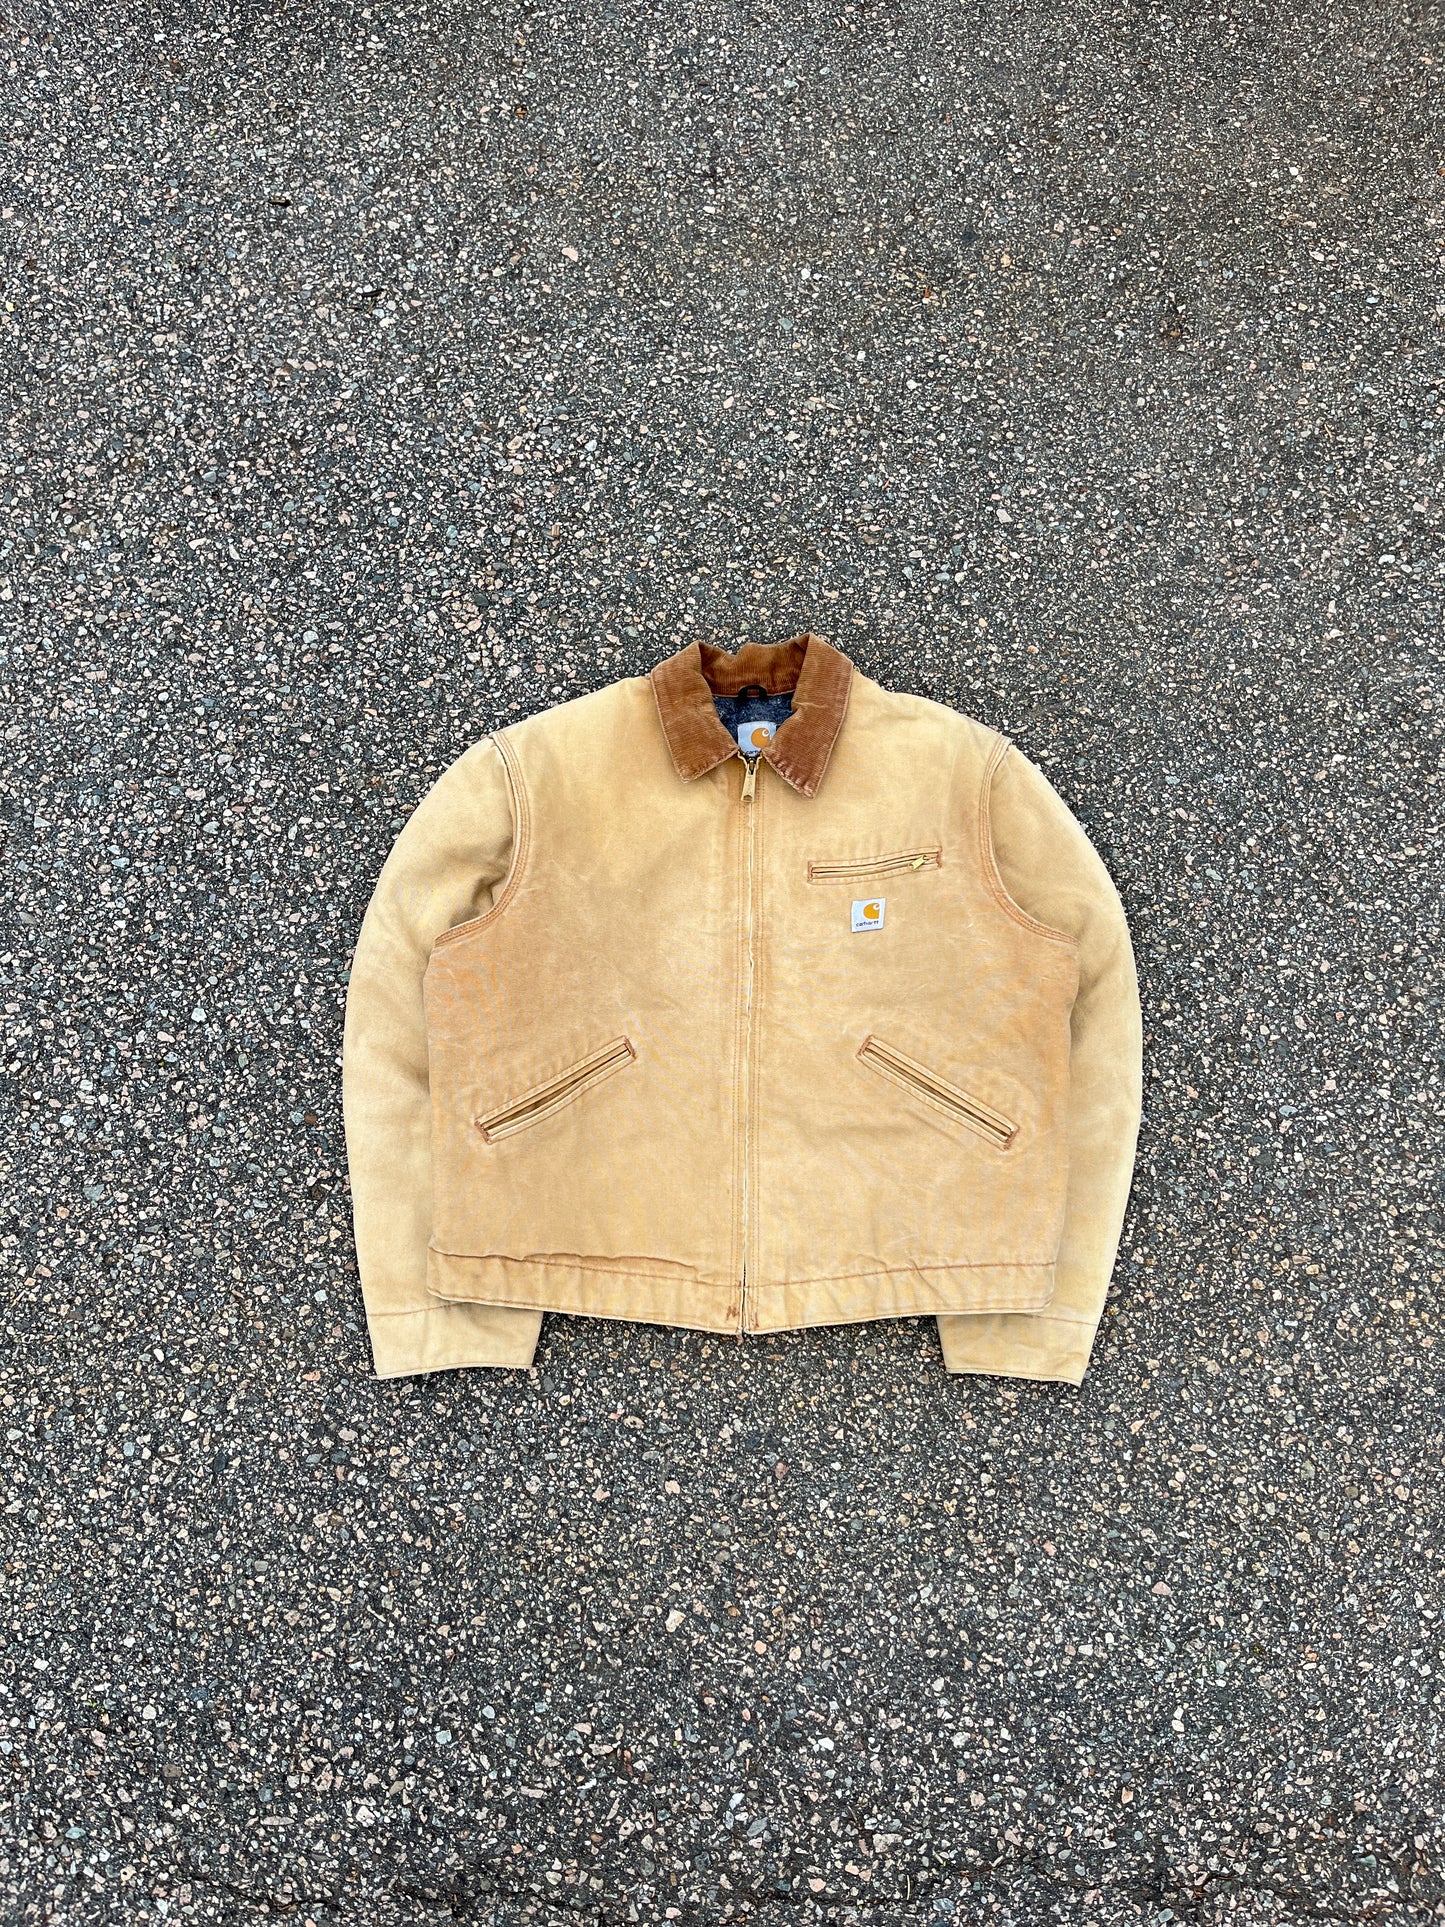 Faded Tan Carhartt Detroit Jacket - Boxy Medium